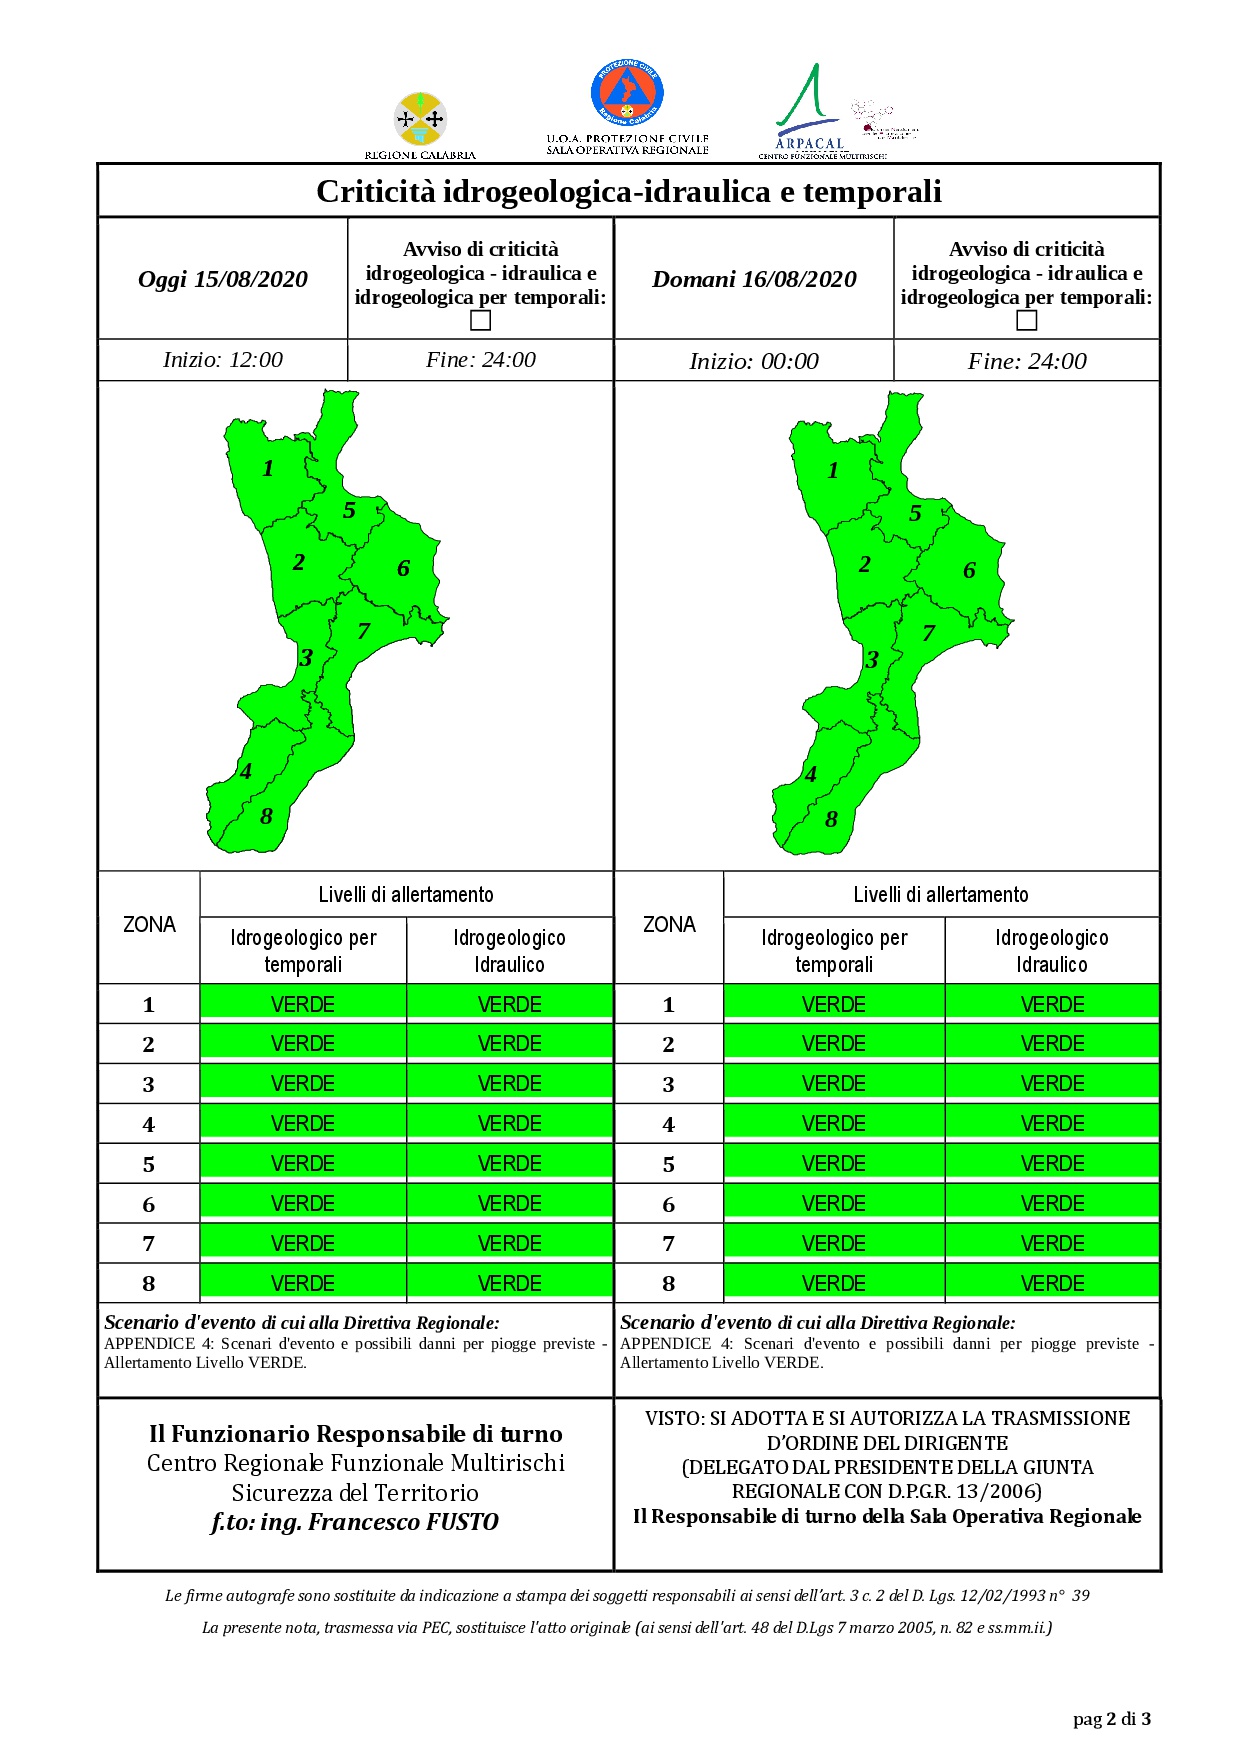 Criticità idrogeologica-idraulica e temporali in Calabria 15-08-2020